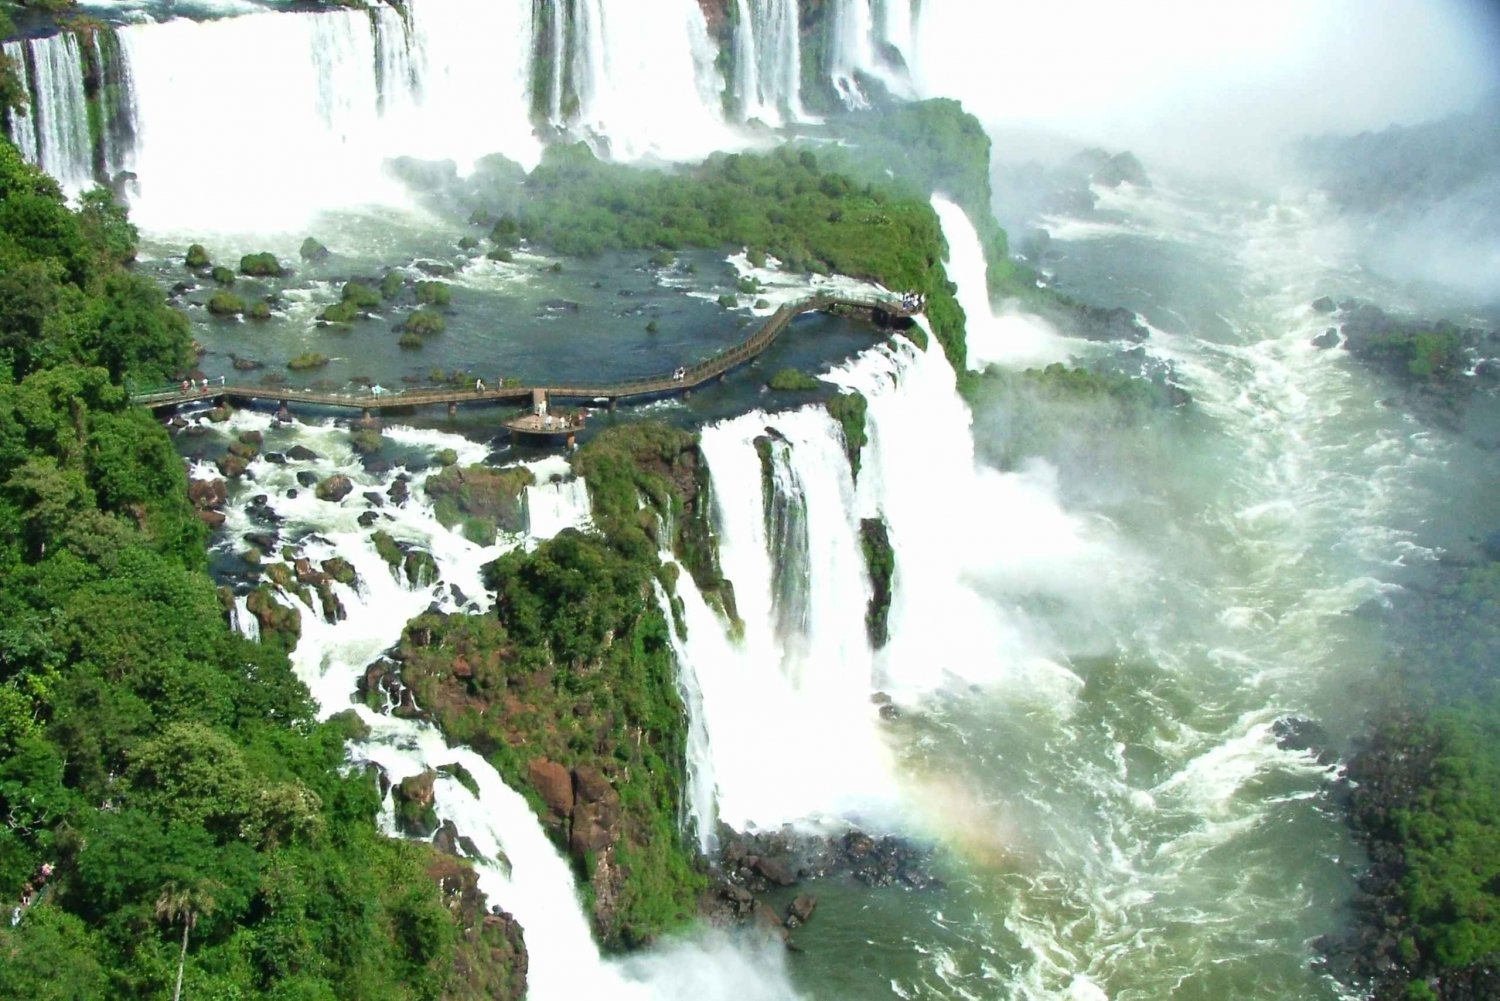 A Woderfull day at the Iguassu falls Argentinean side